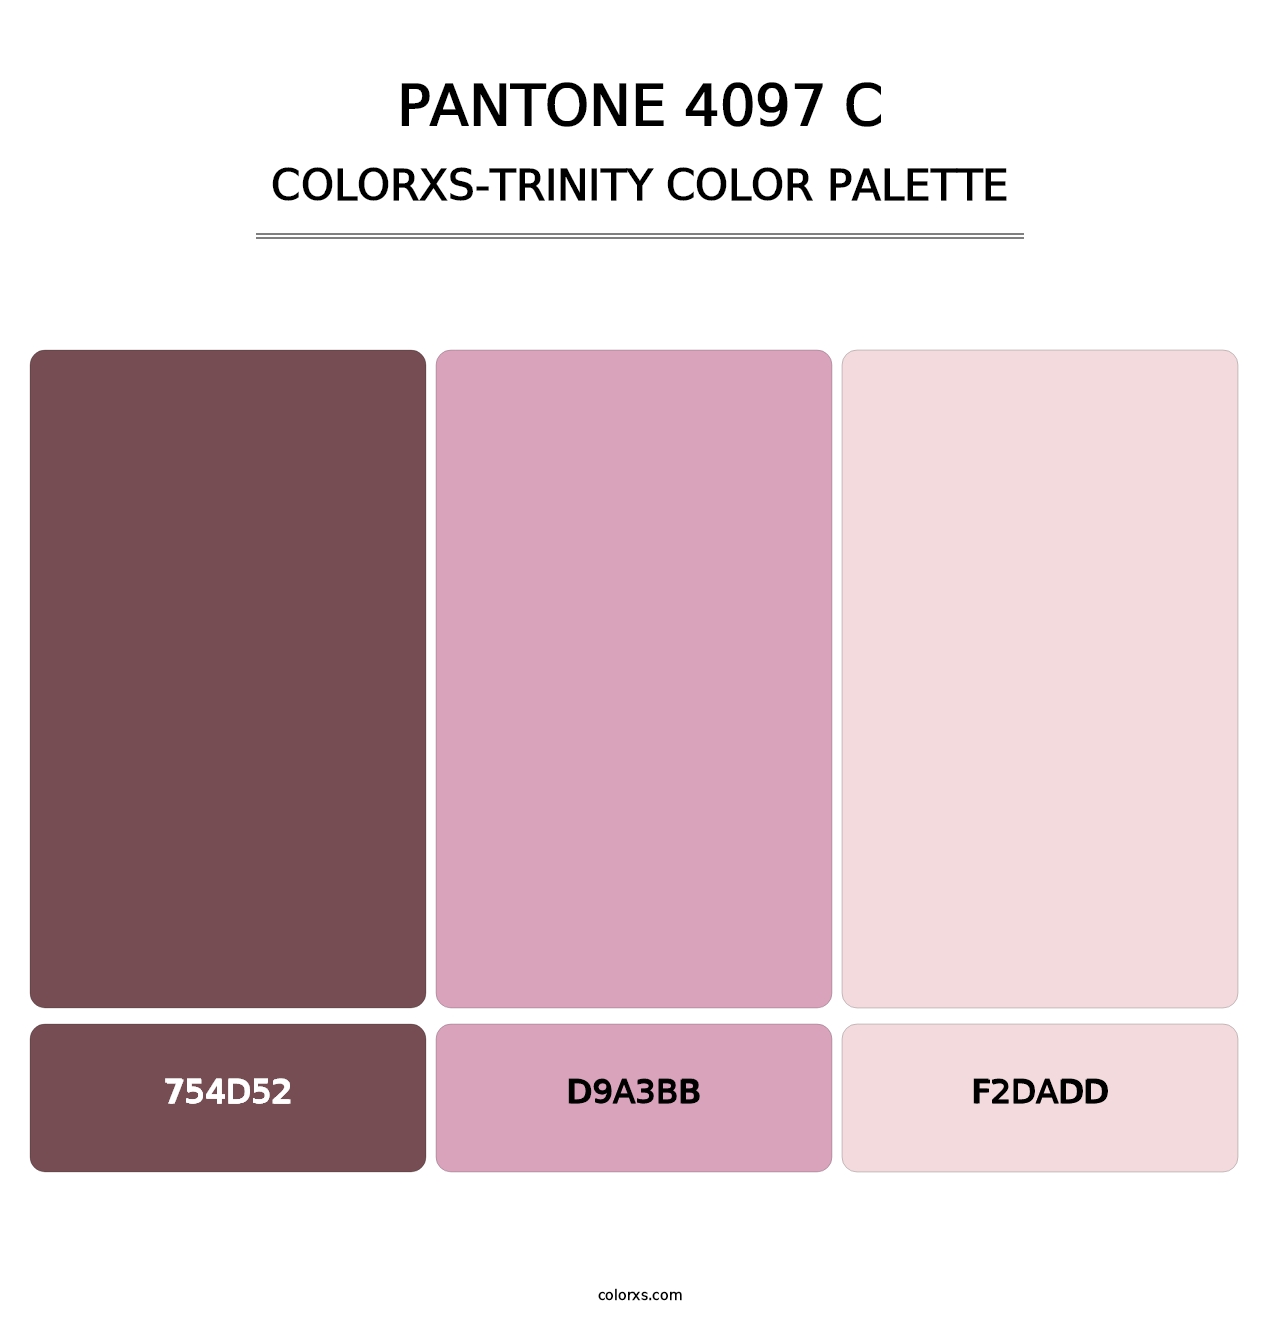 PANTONE 4097 C - Colorxs Trinity Palette